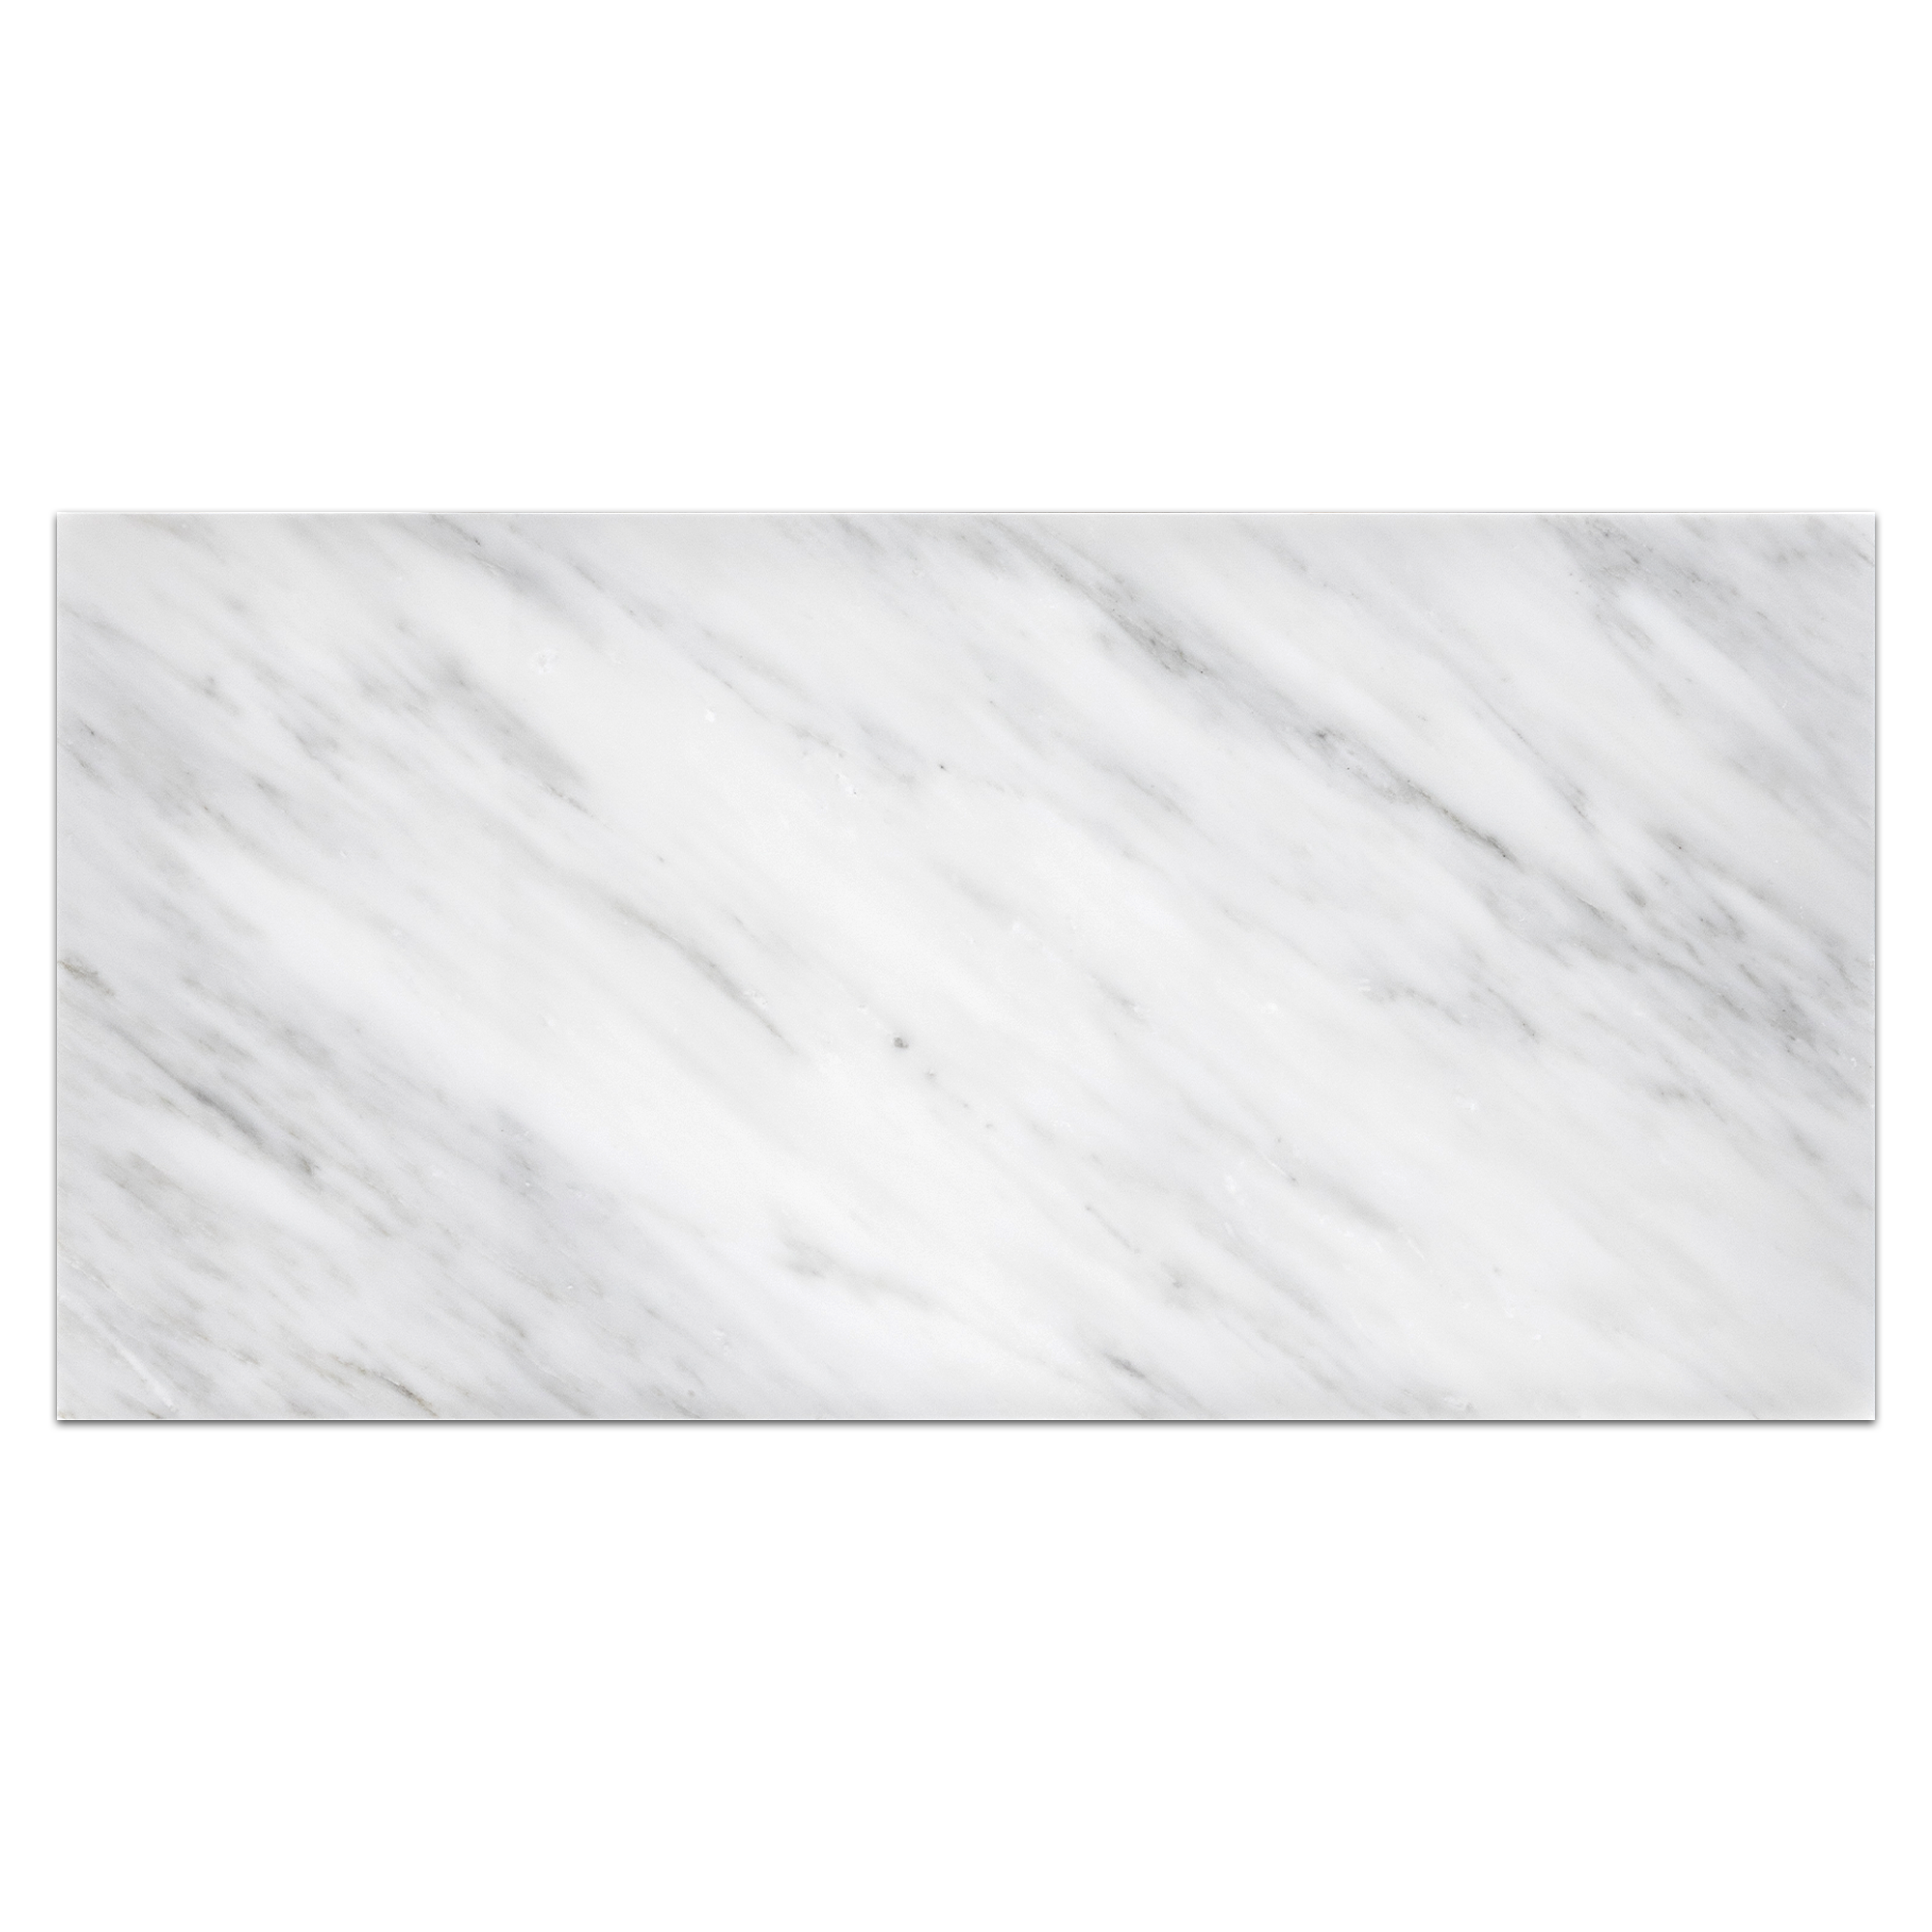 Elon Mystic Gray Marble Rectangle Field Tile 12x24x0.375 Honed - Surface Group International